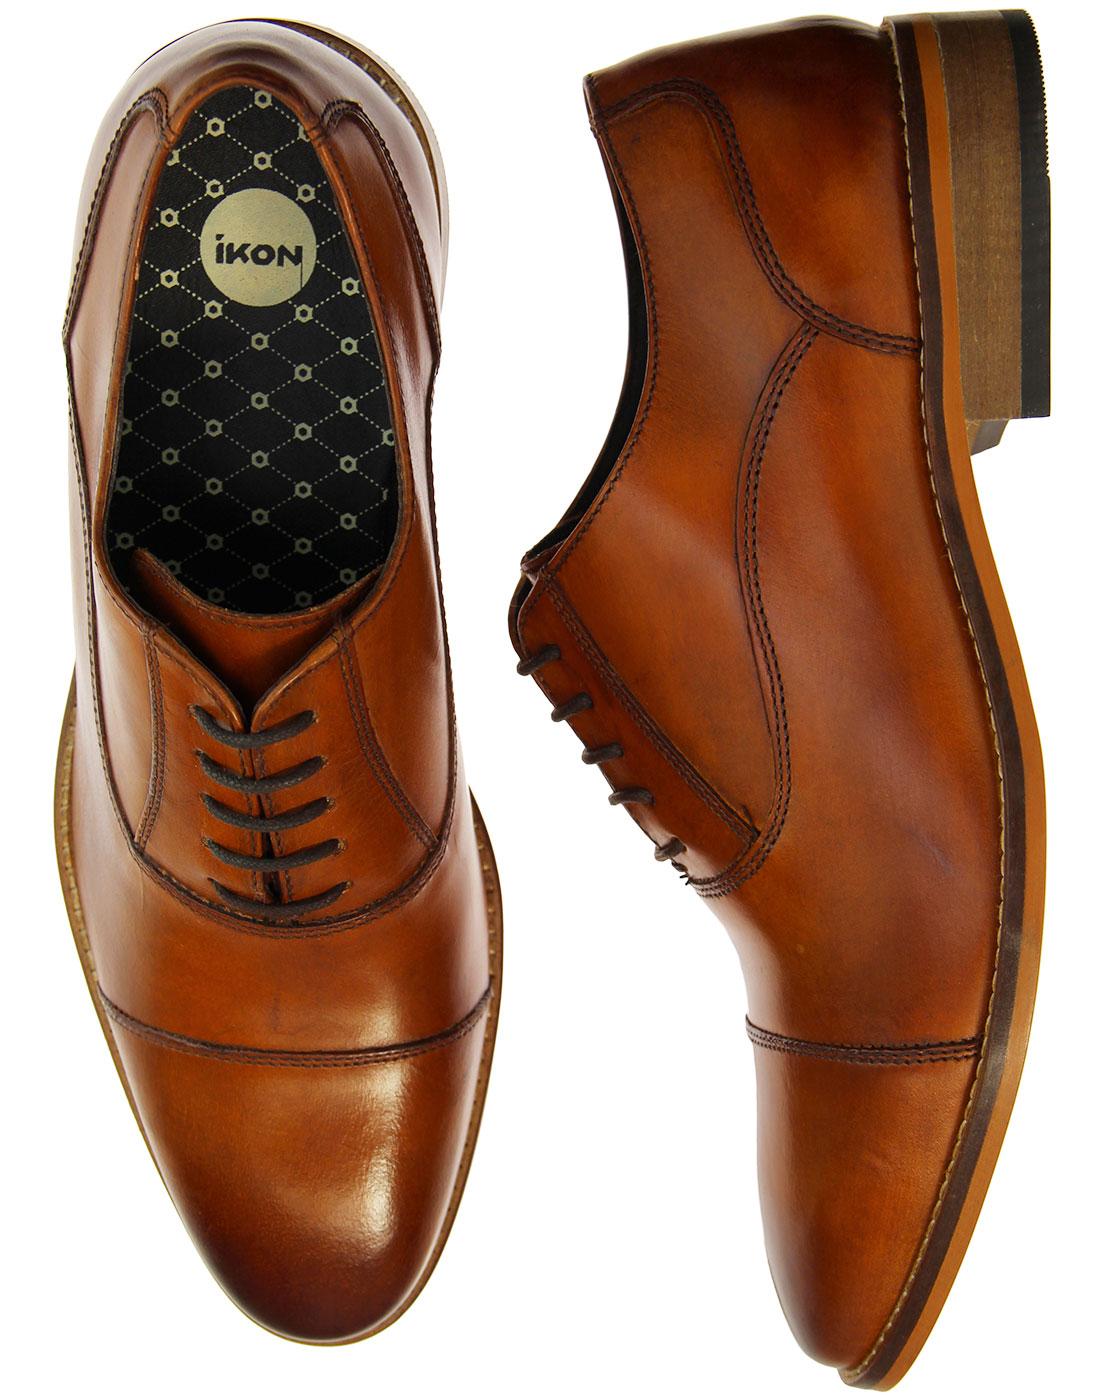 IKON Toby Men's Retro 60s Mod Toe Cap Oxford Shoes in Tan